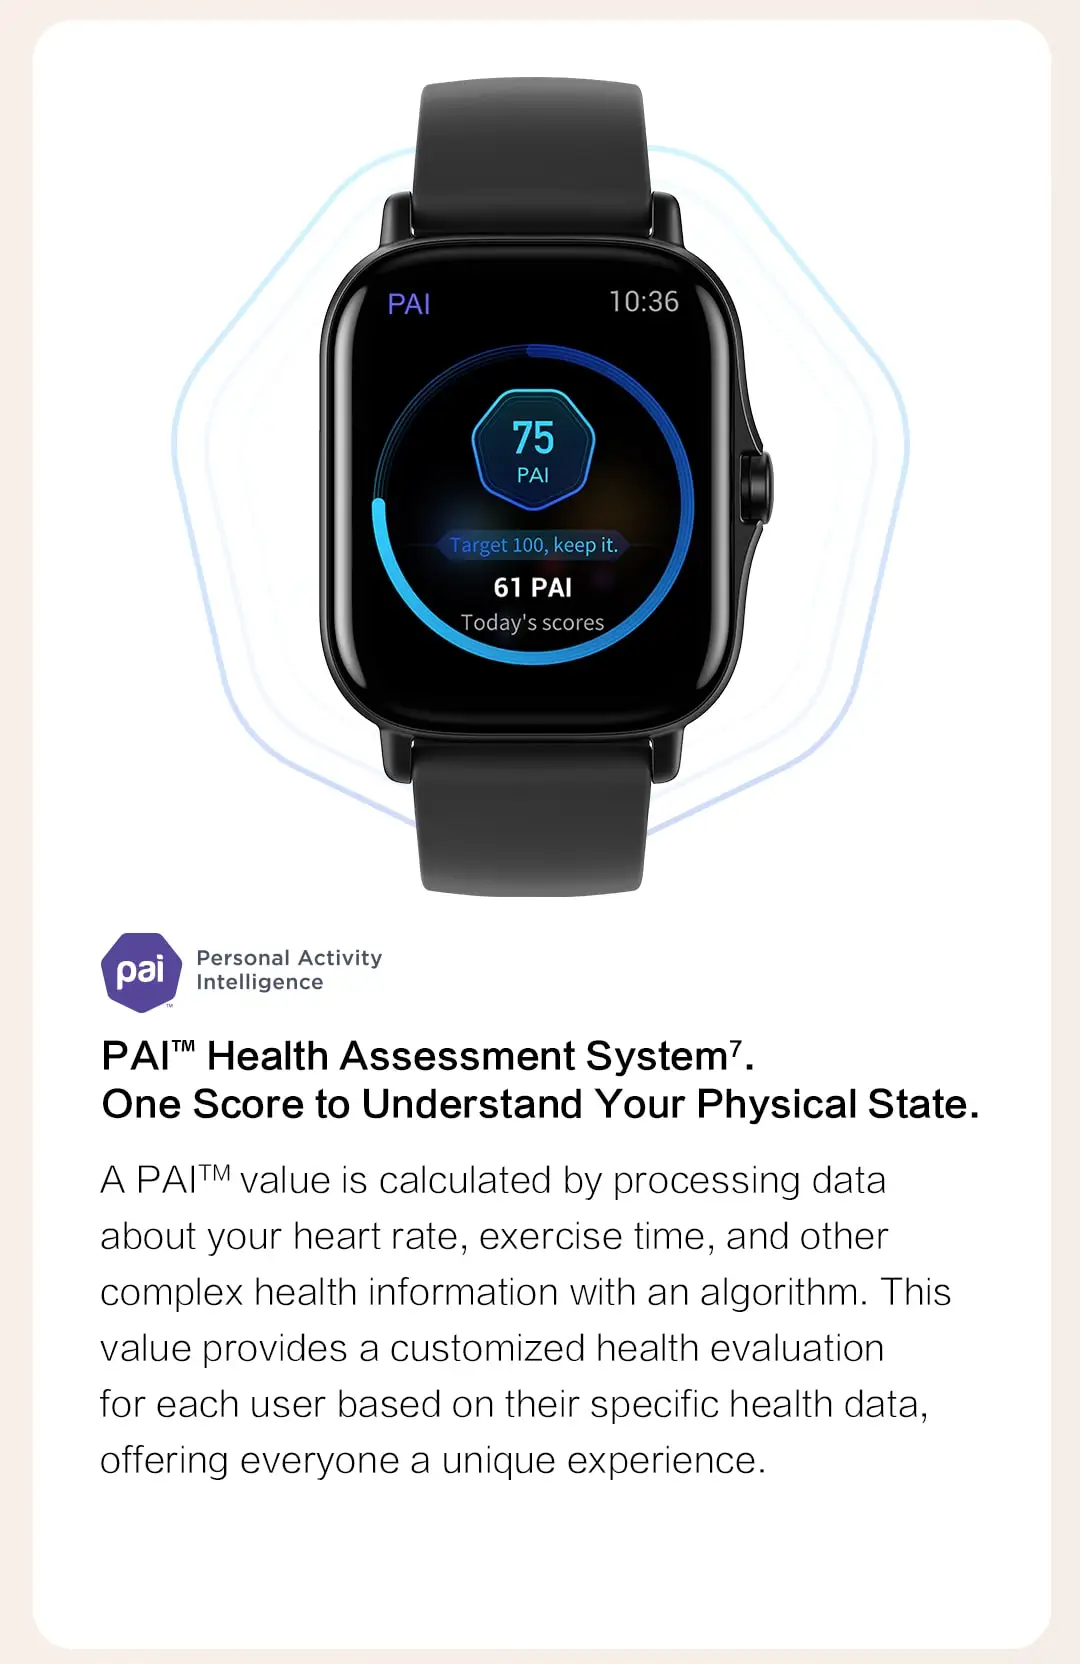 Amazfit GTS 2 Alexa Built-in AMOLED Display Smartwatch